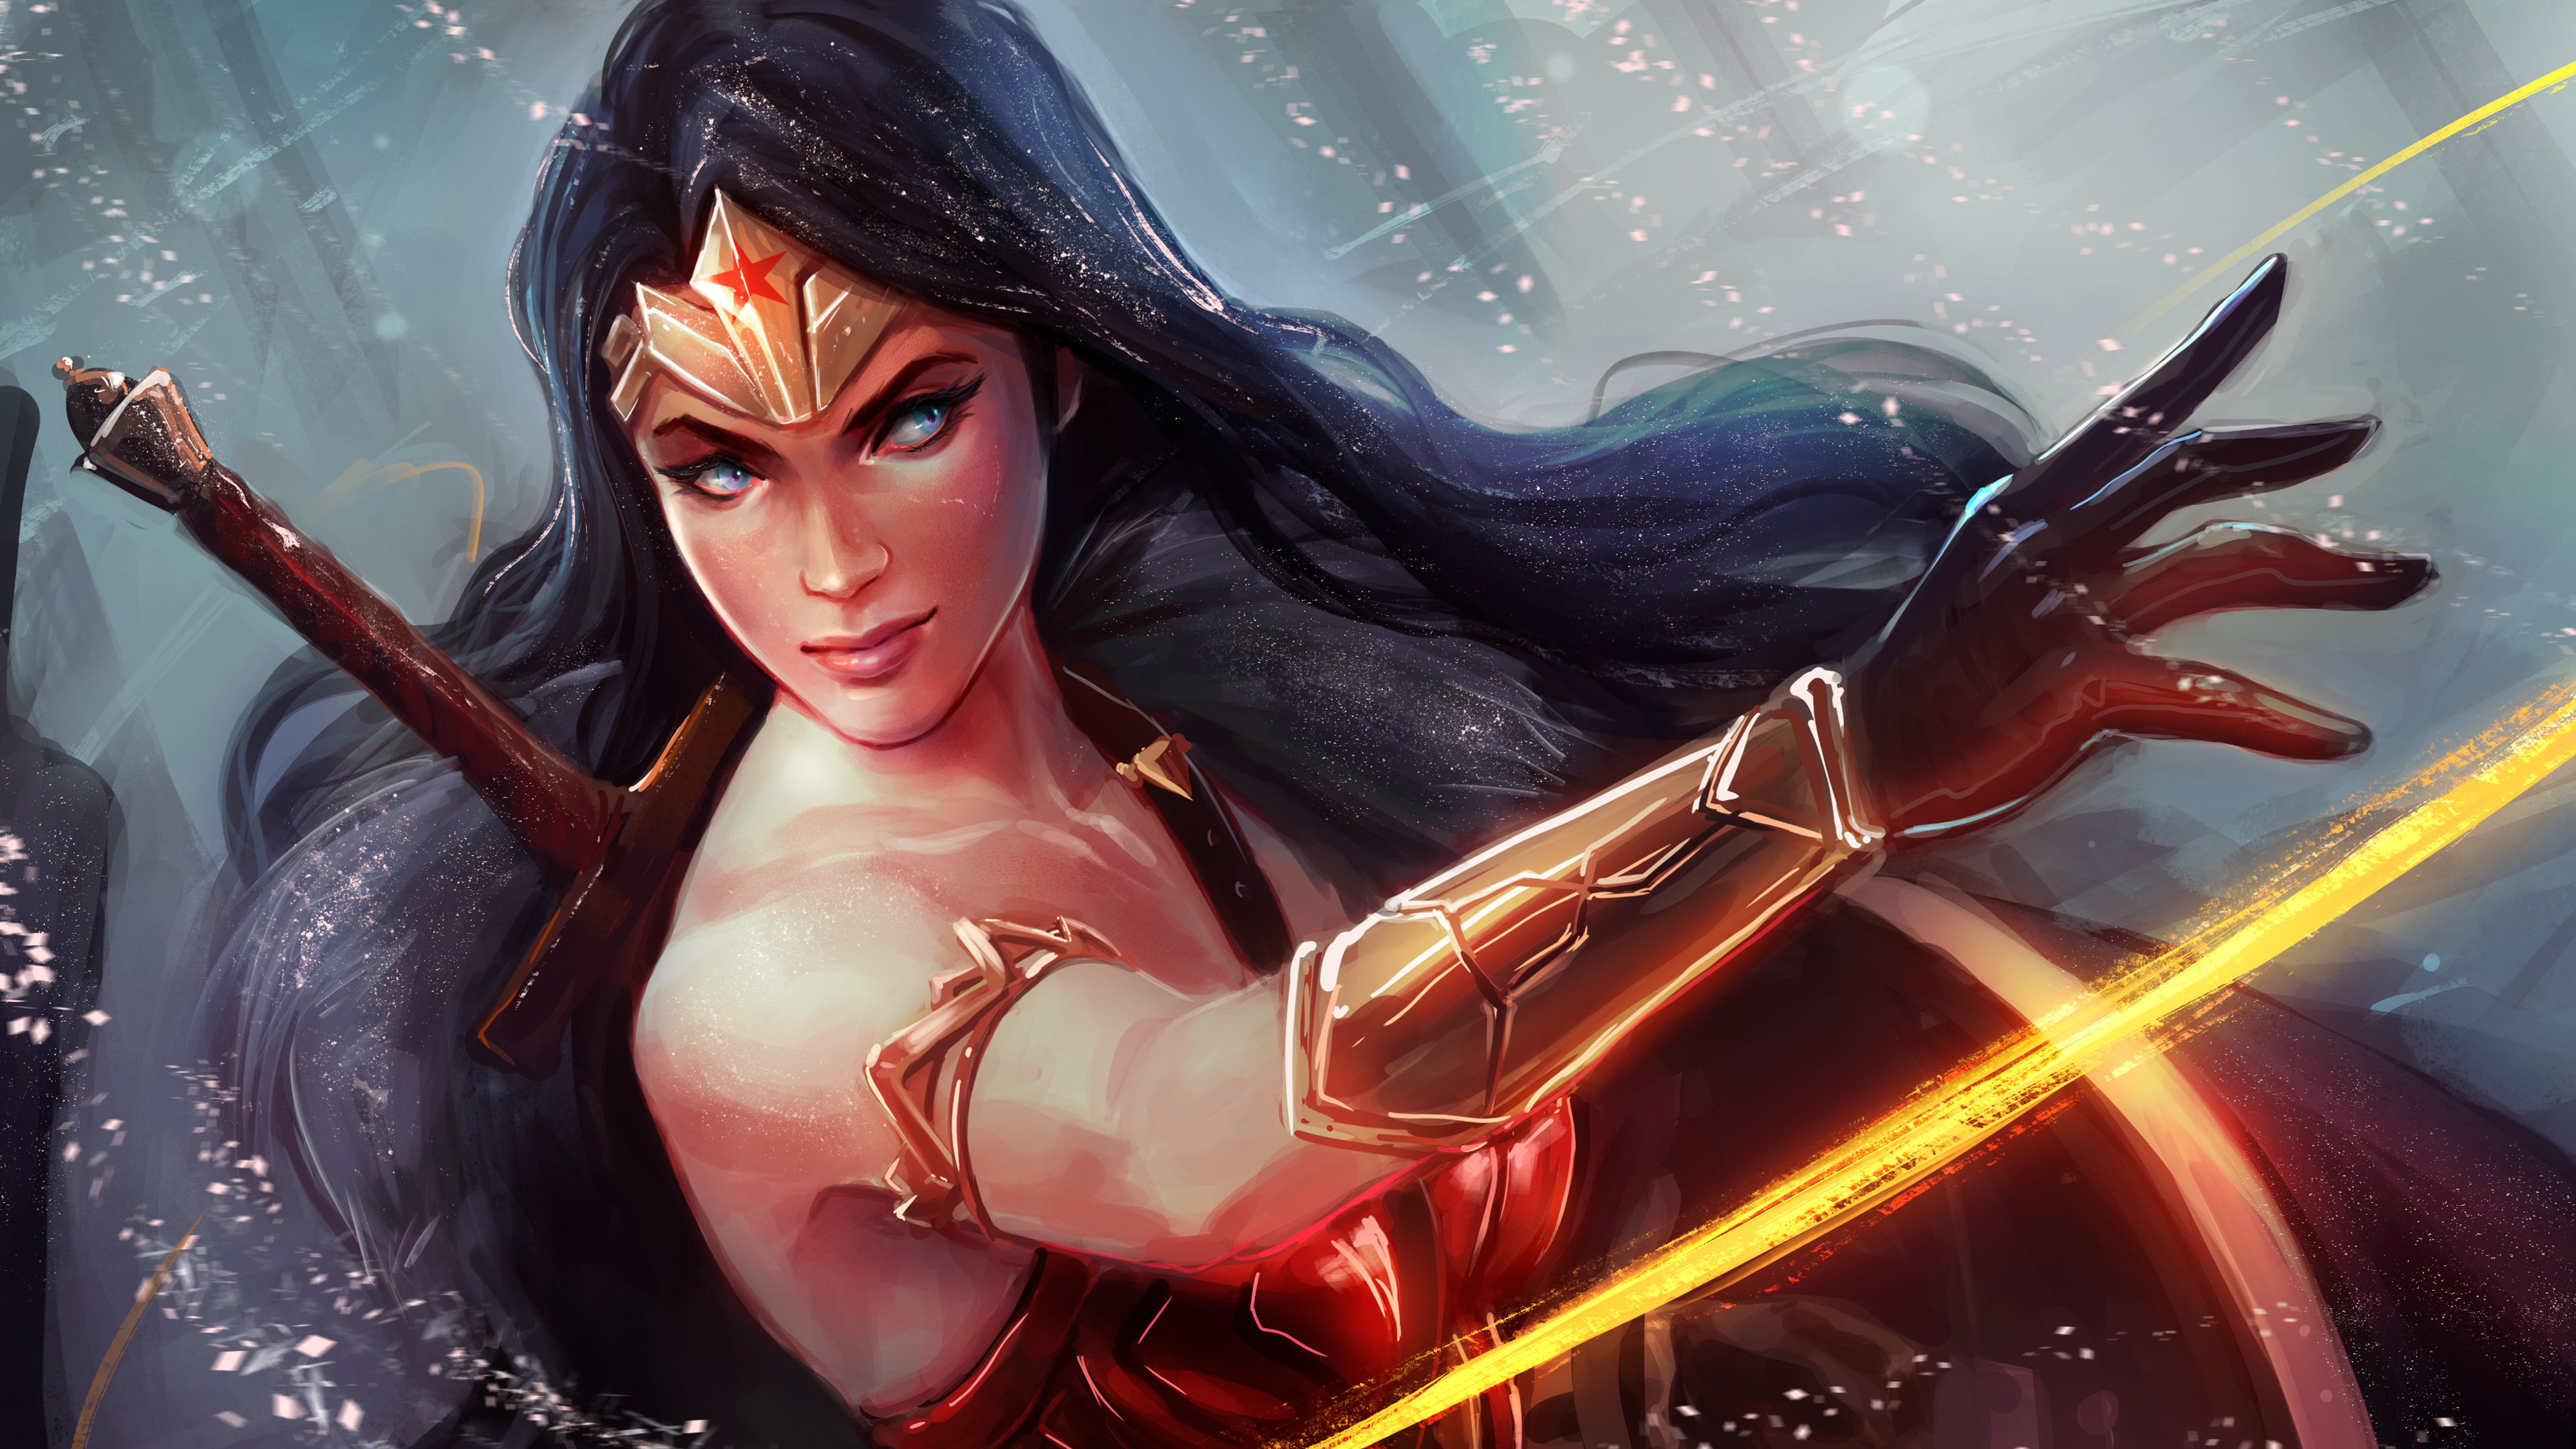 Wonder Woman 4K Artwork Wallpapers